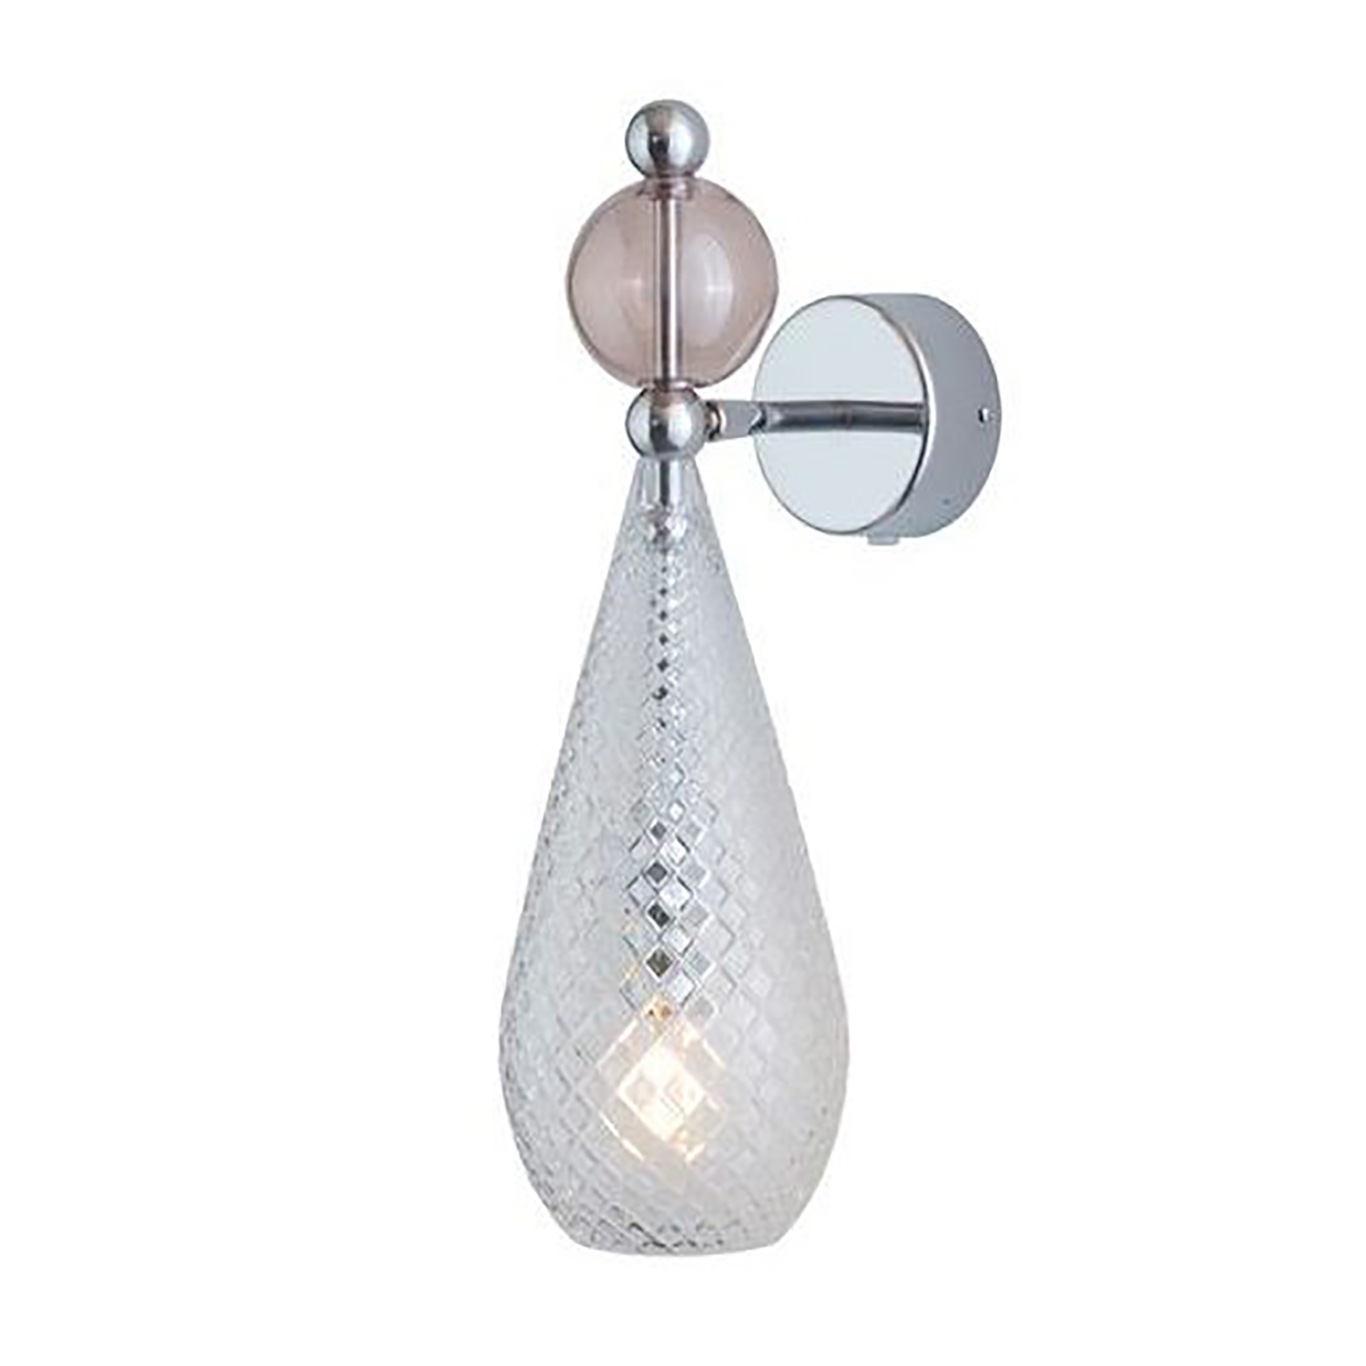 Smykke Wall Lamp, Crystal Check / Obsidian Ball / Shiny Silver